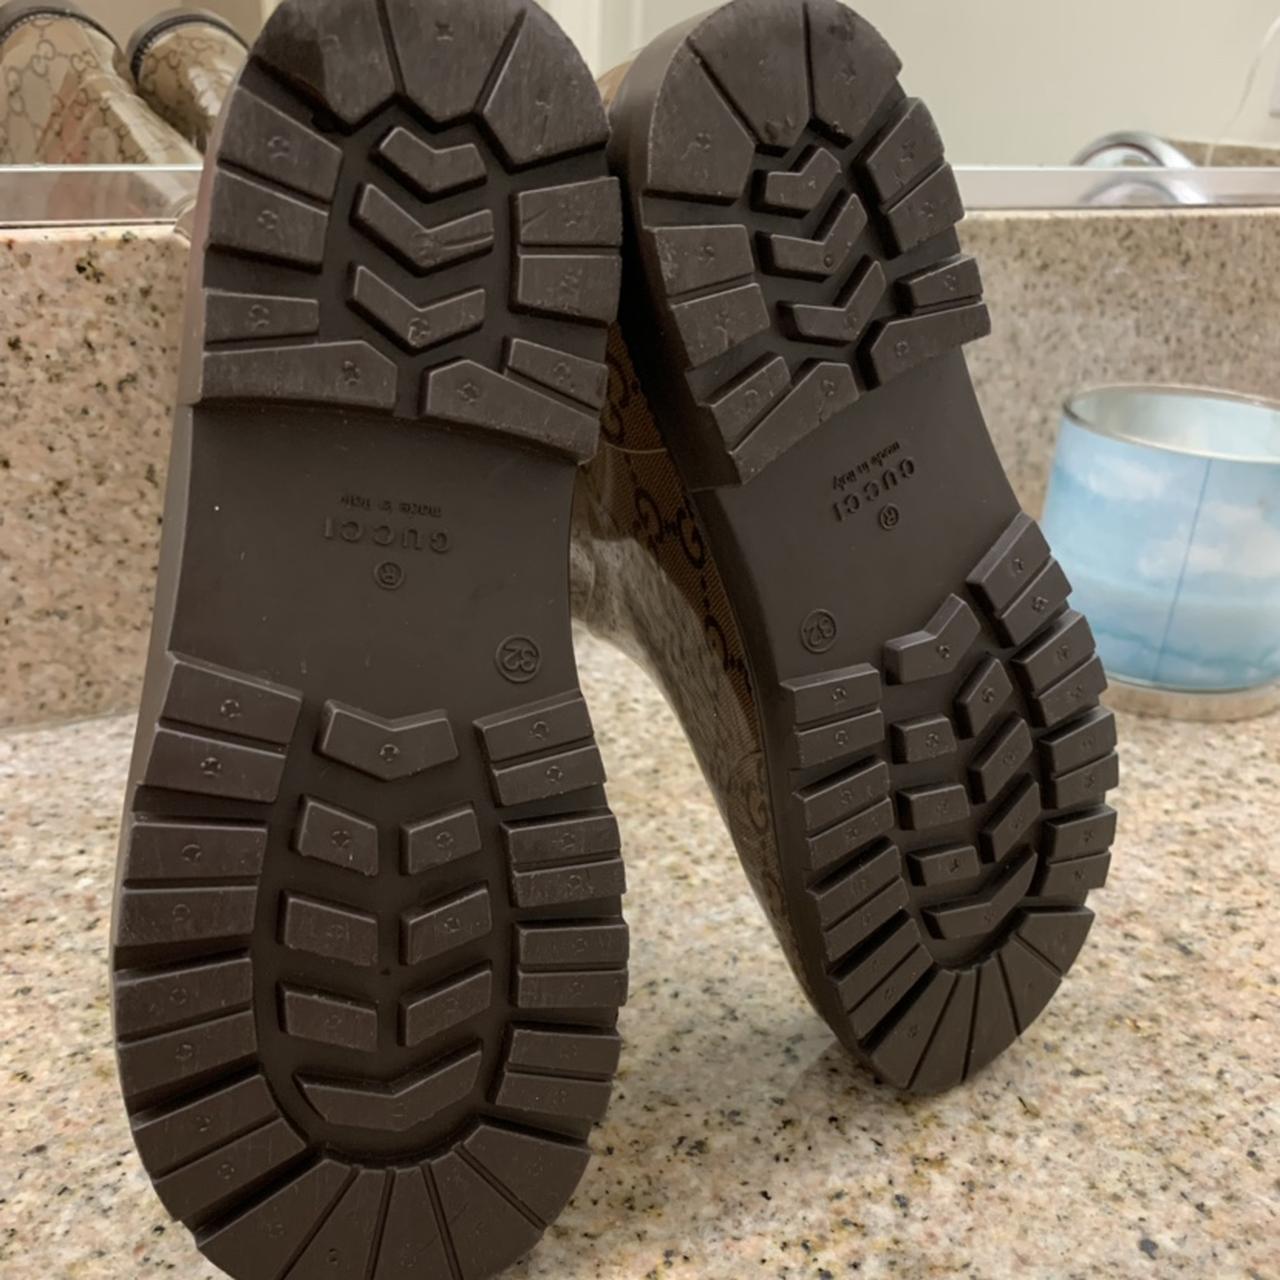 Size 36 Gucci rain boots - Depop